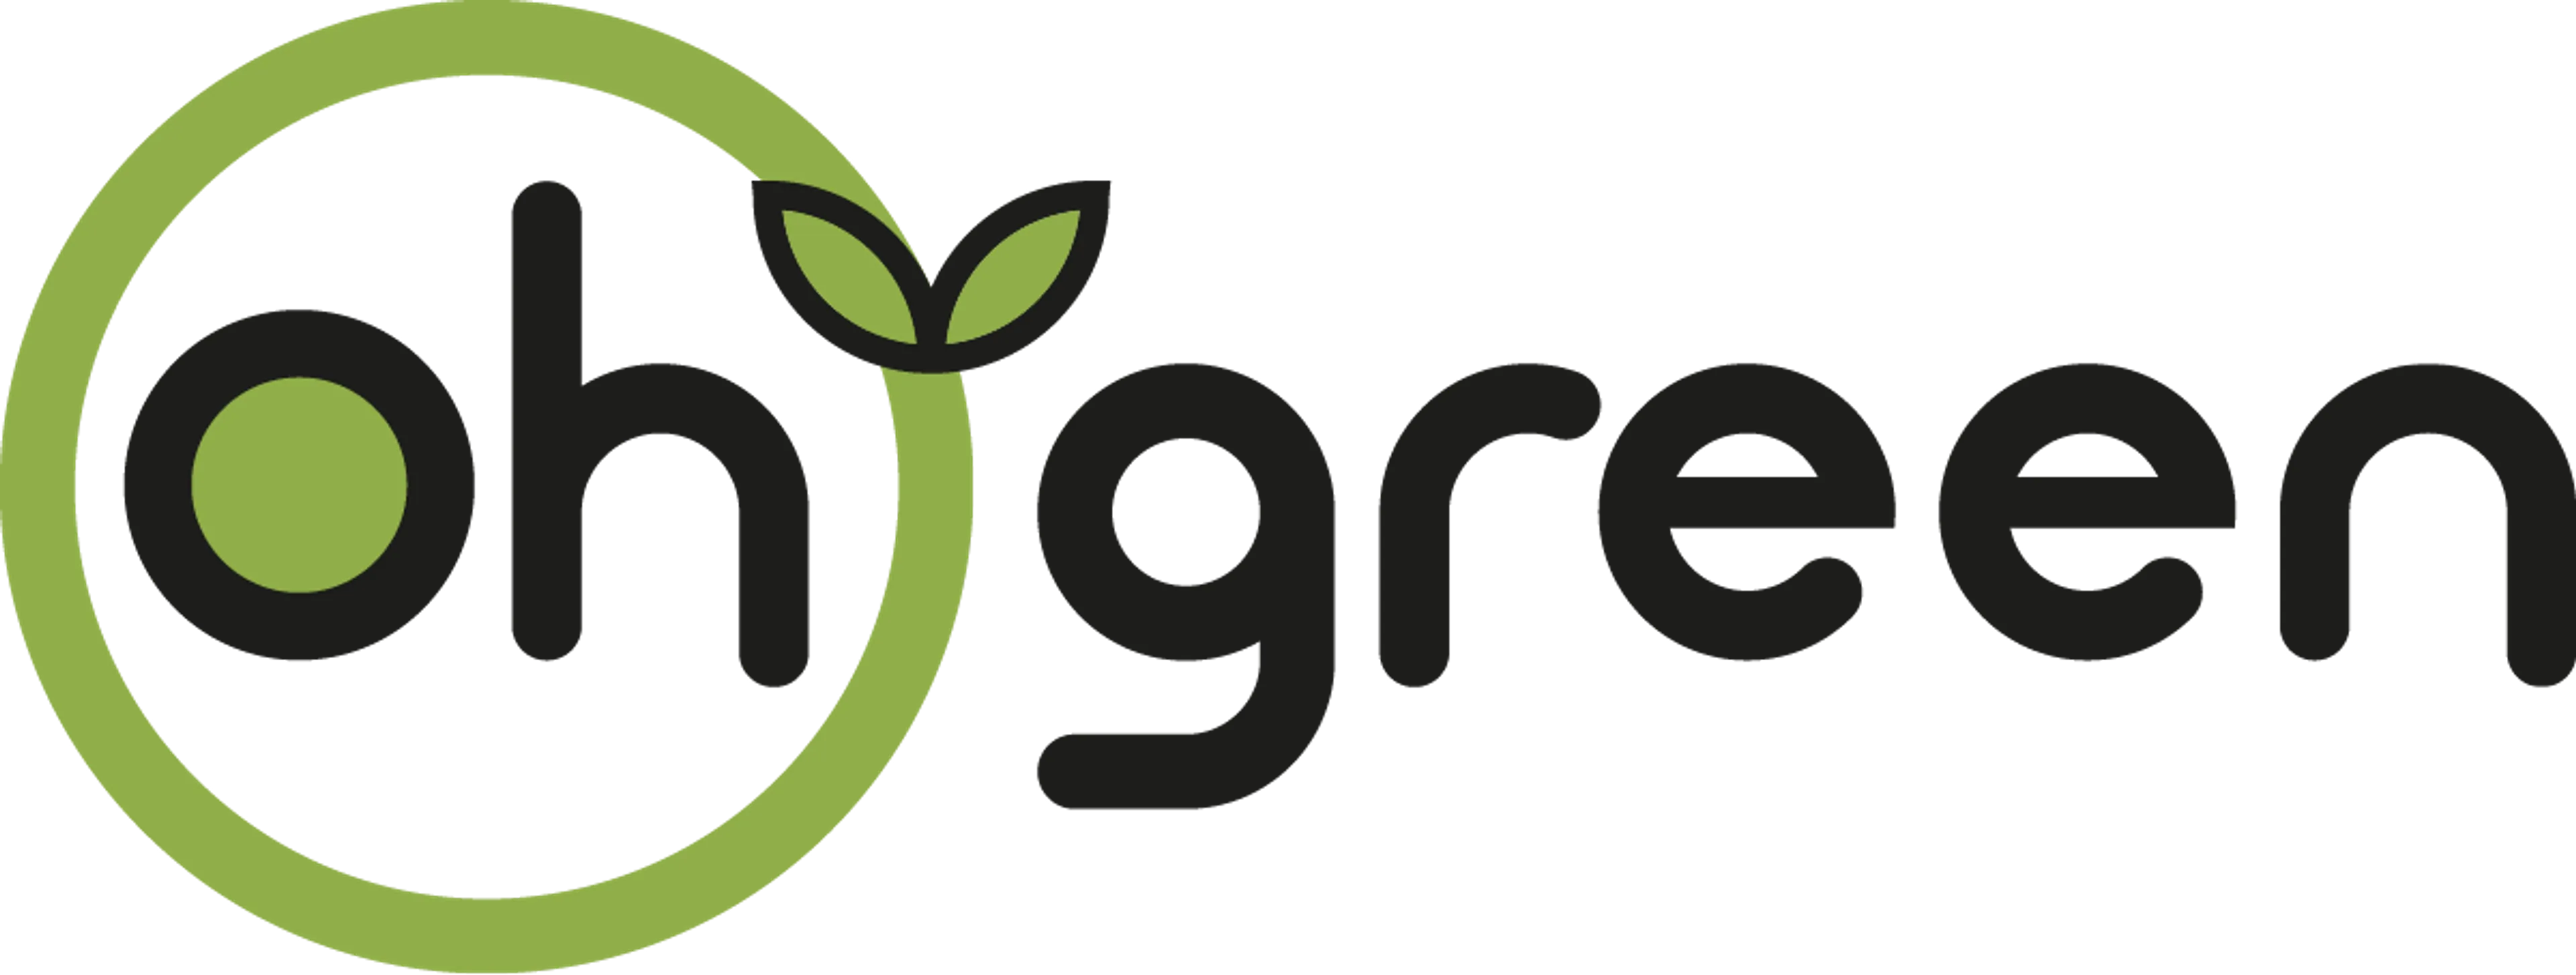 OH'GREEN logo